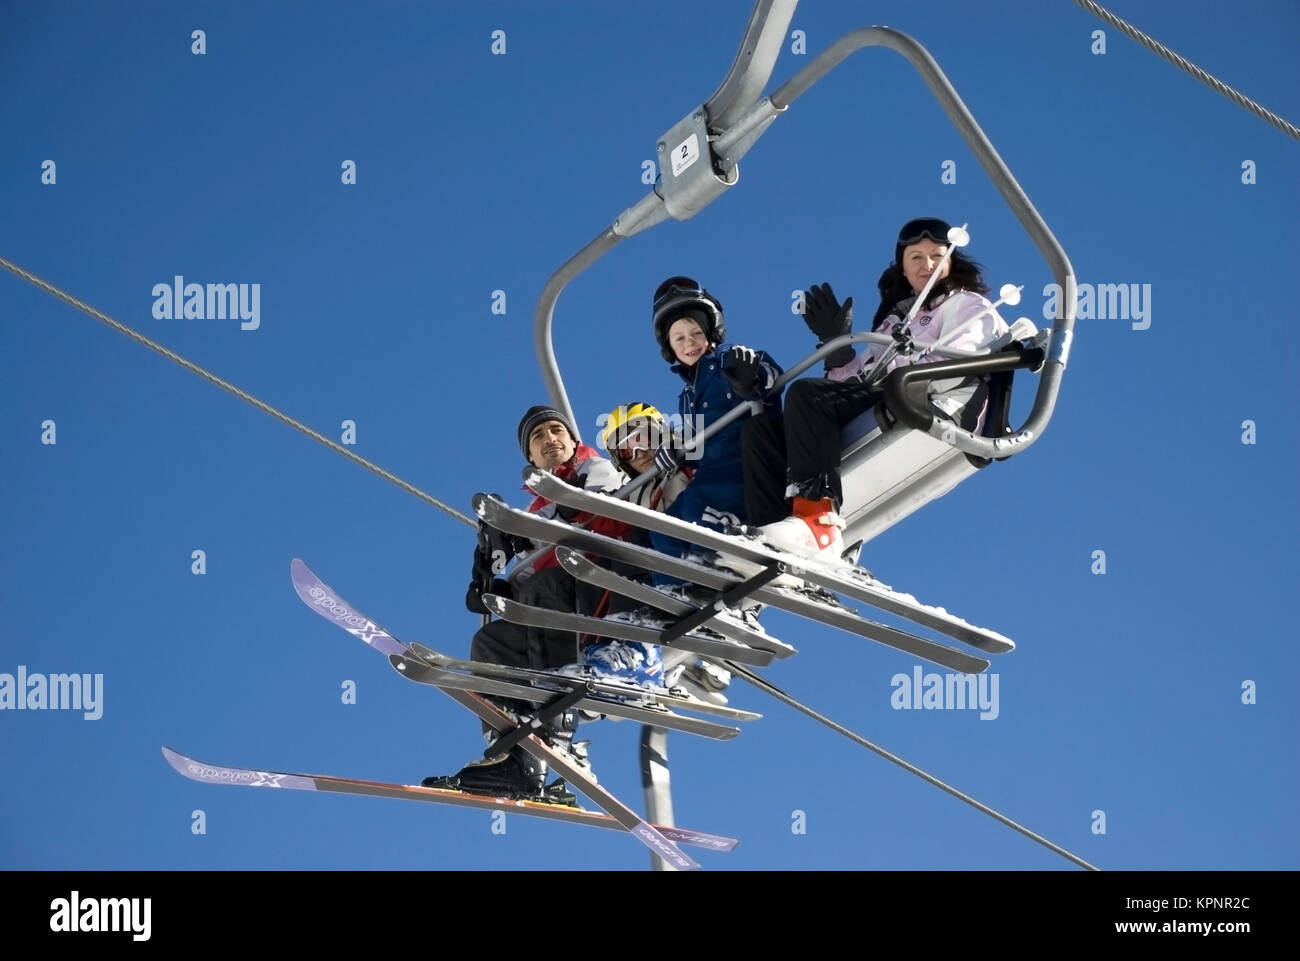 Skifahrer am Sessellift - skier on chair lift Stock Photo